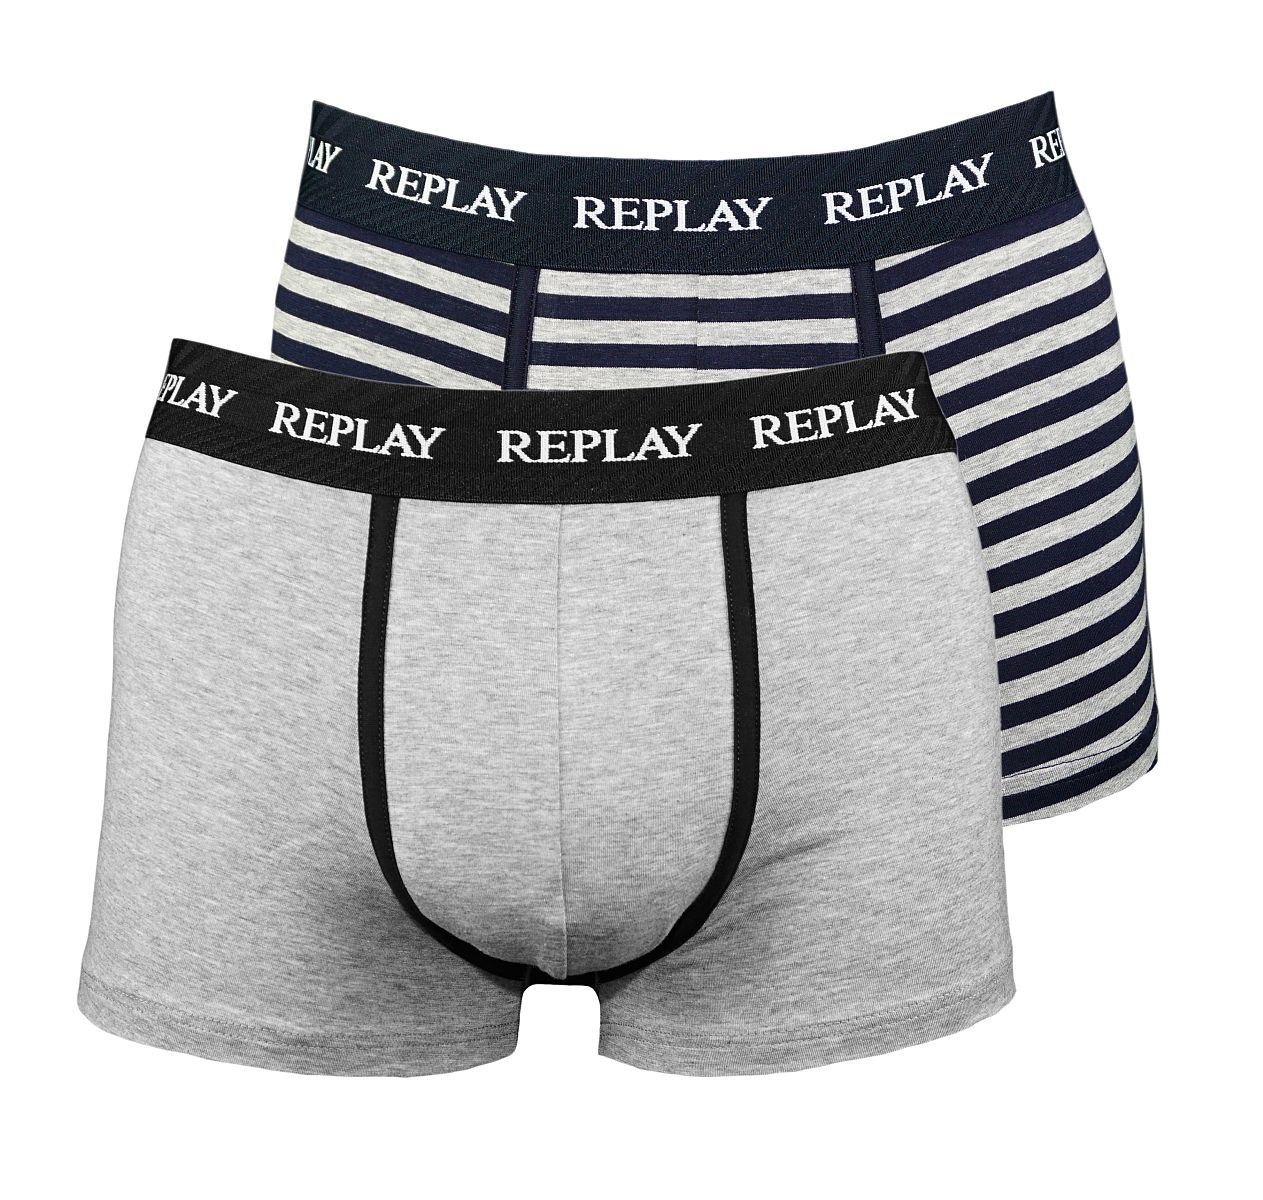 Replay 2er Pack Shorts Trunks Boxershorts M601211 C21 grau W18-RY1